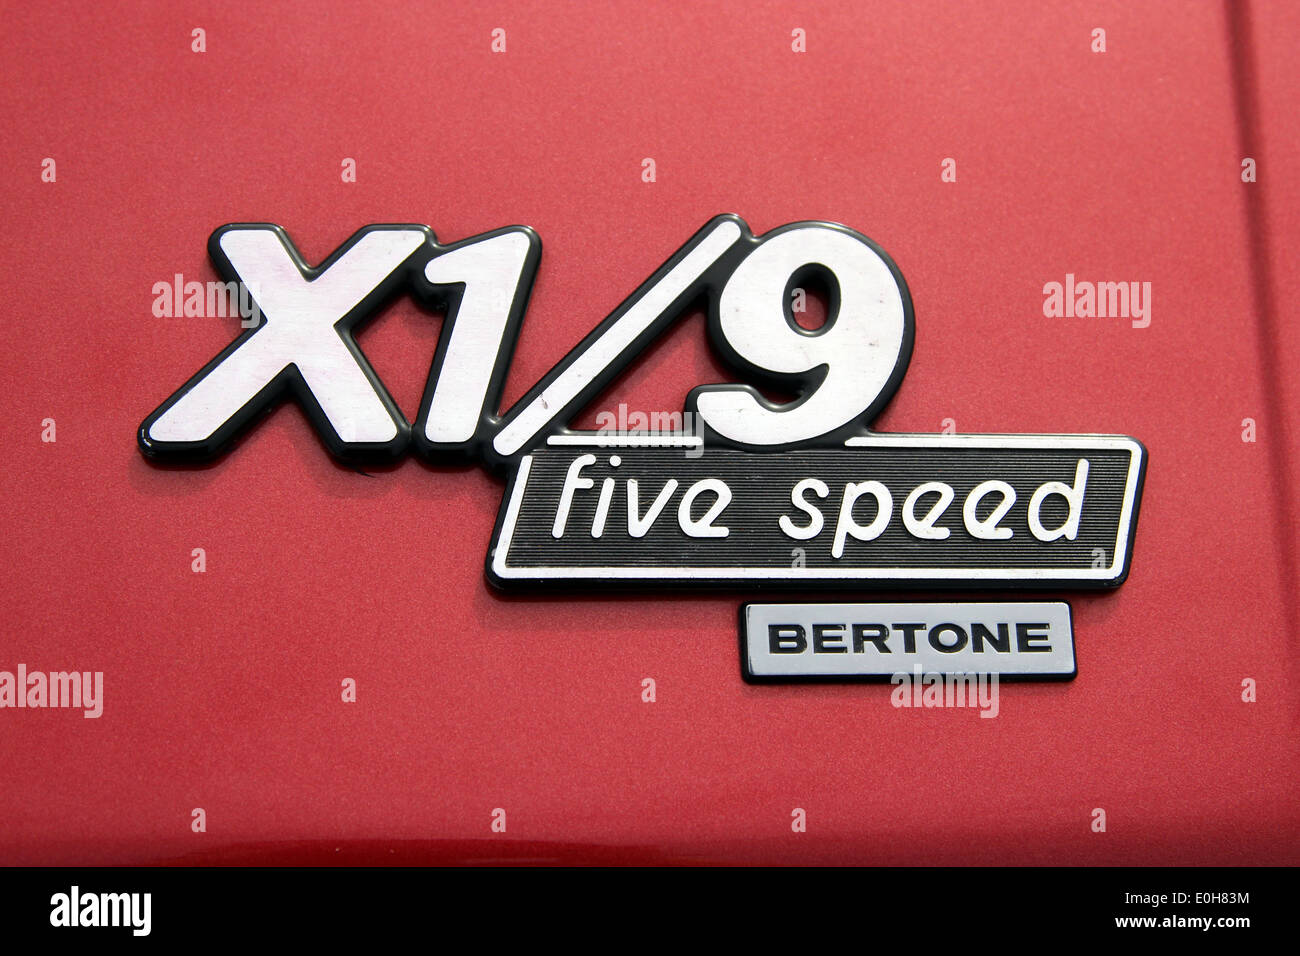 Car badge on a Fiat X1/9 five speed Bertone car. Stock Photo